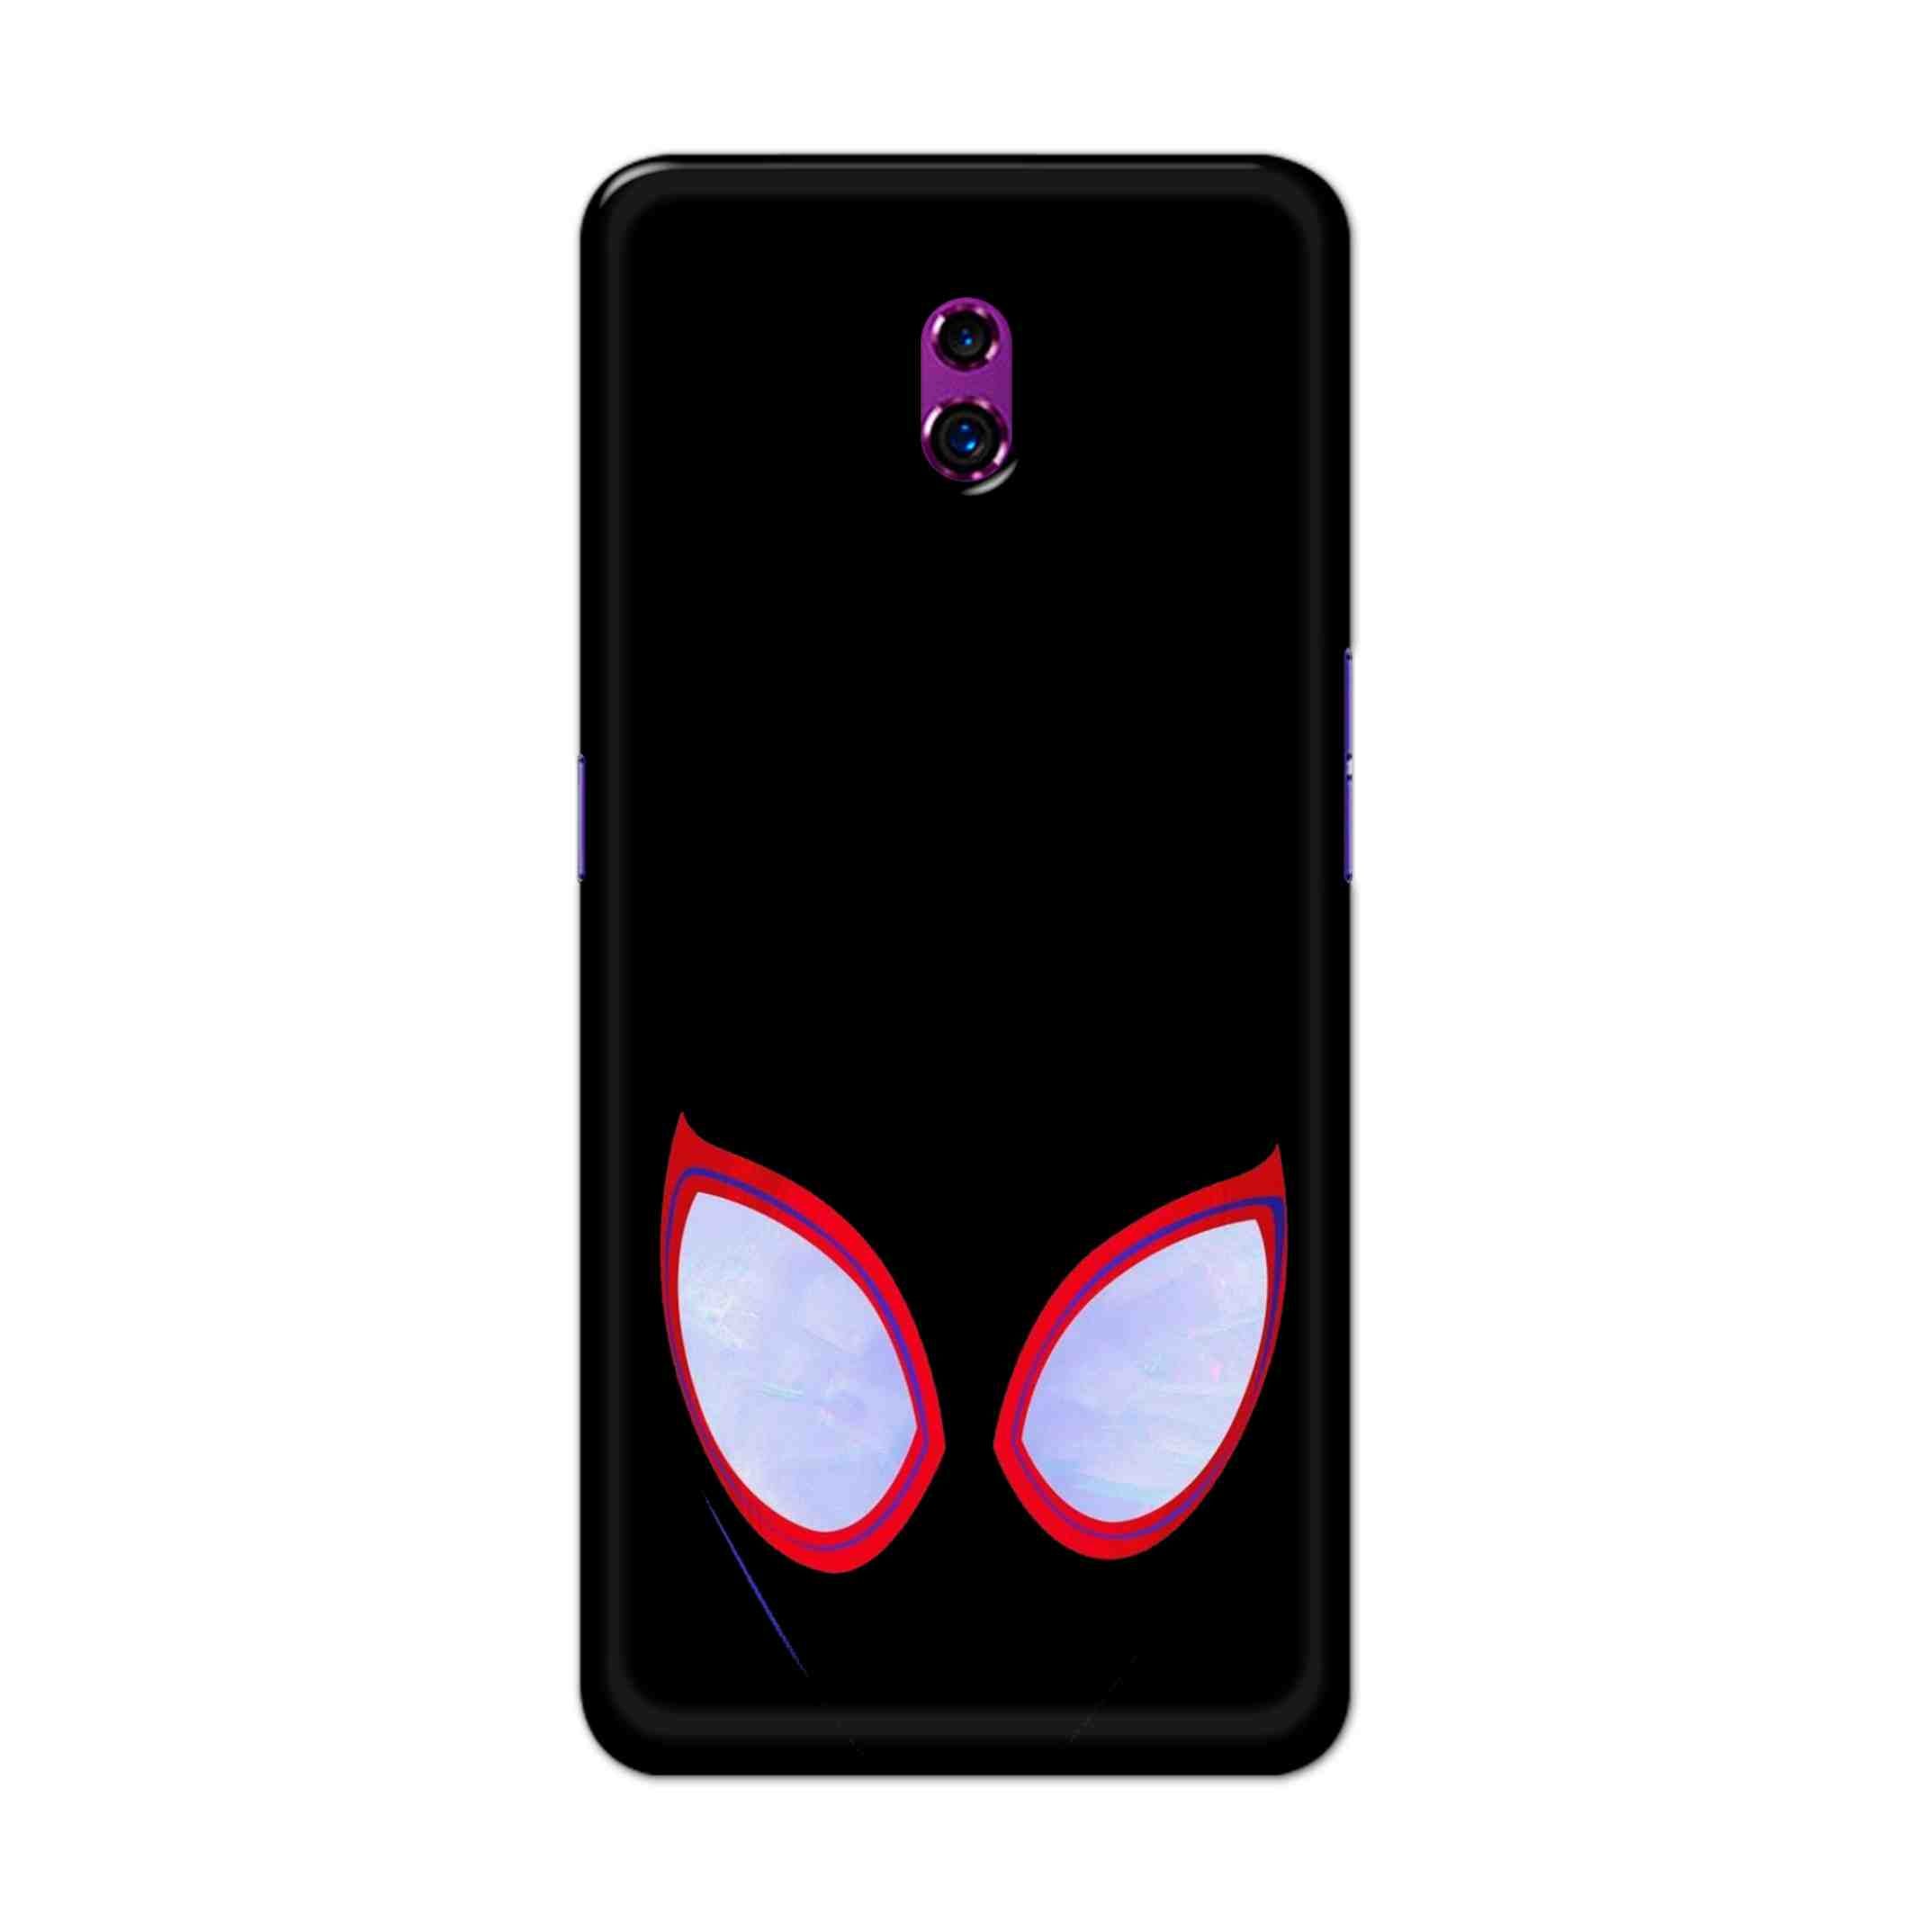 Buy Spiderman Eyes Hard Back Mobile Phone Case Cover For Oppo Reno Online